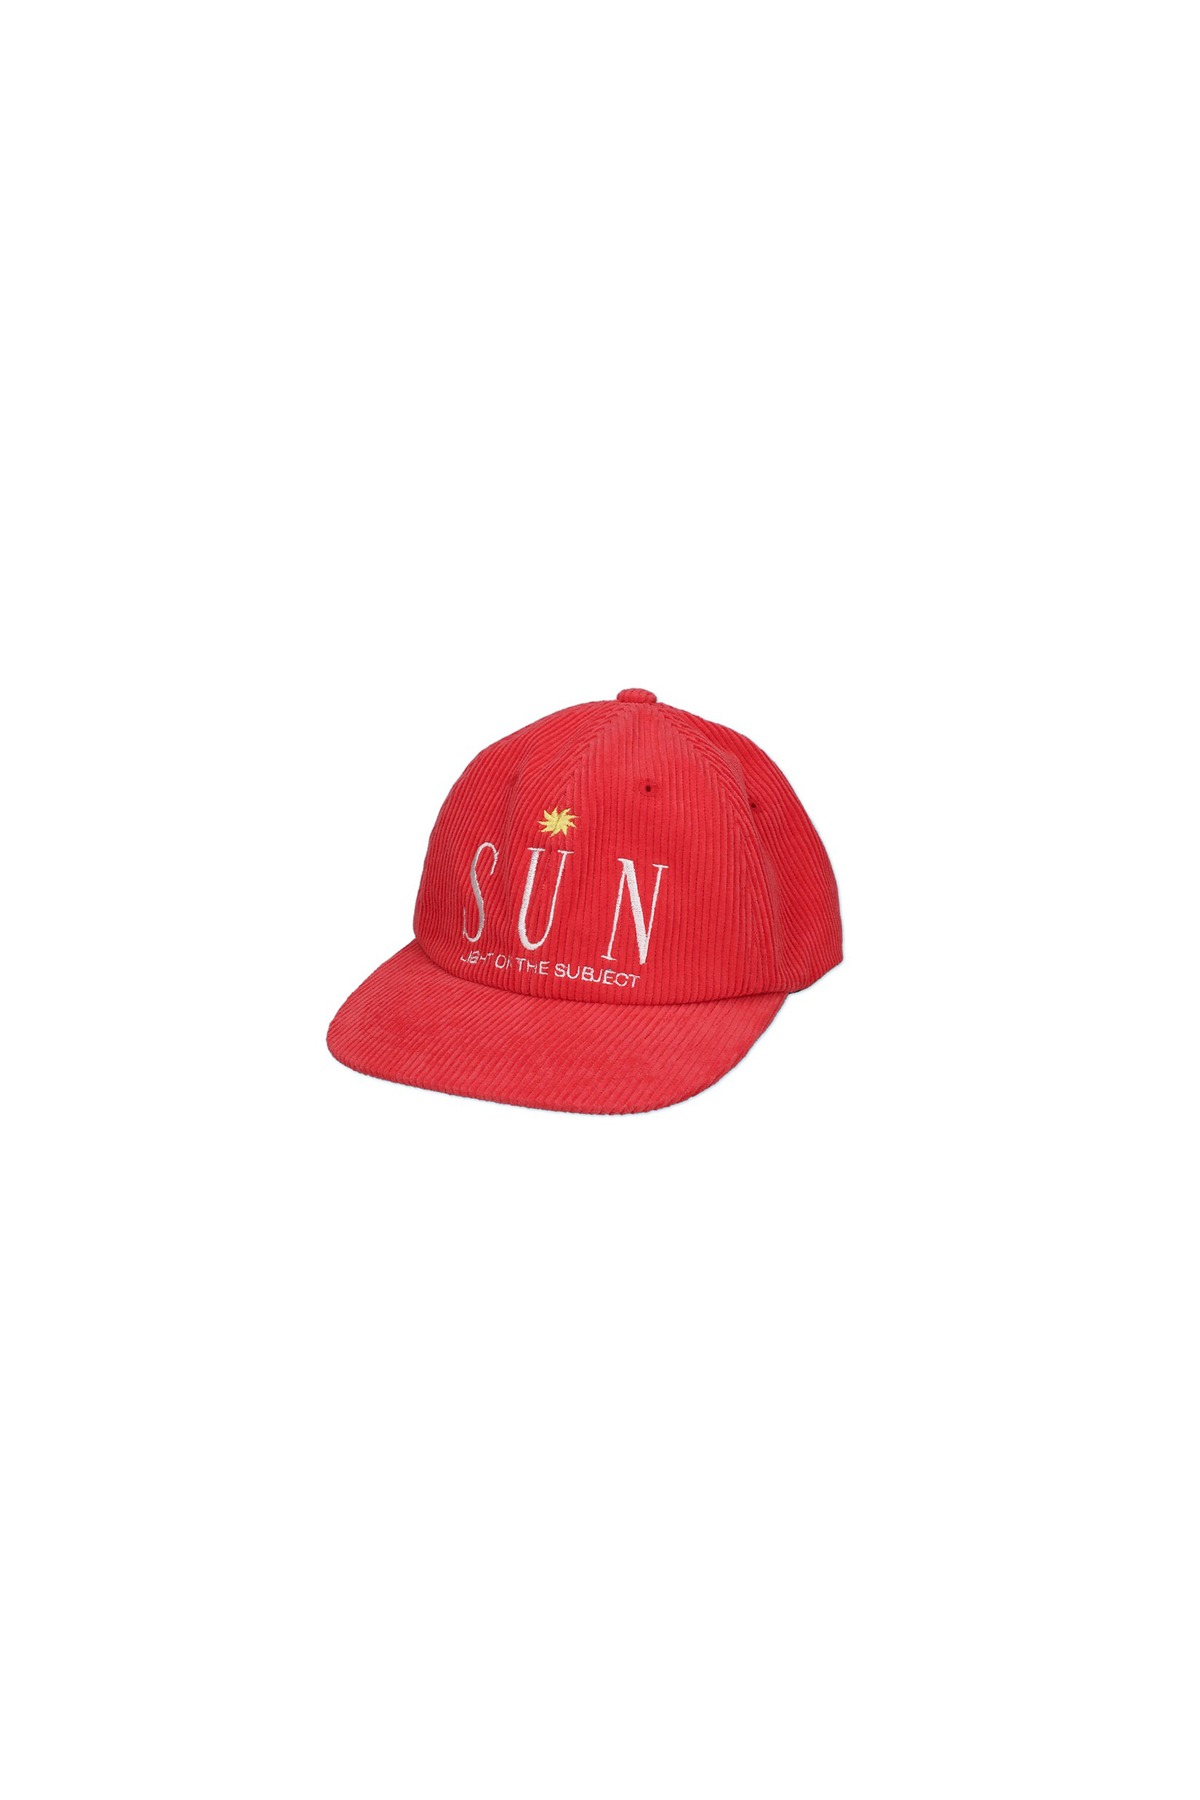 SUN CORDUROY CAP (RED)